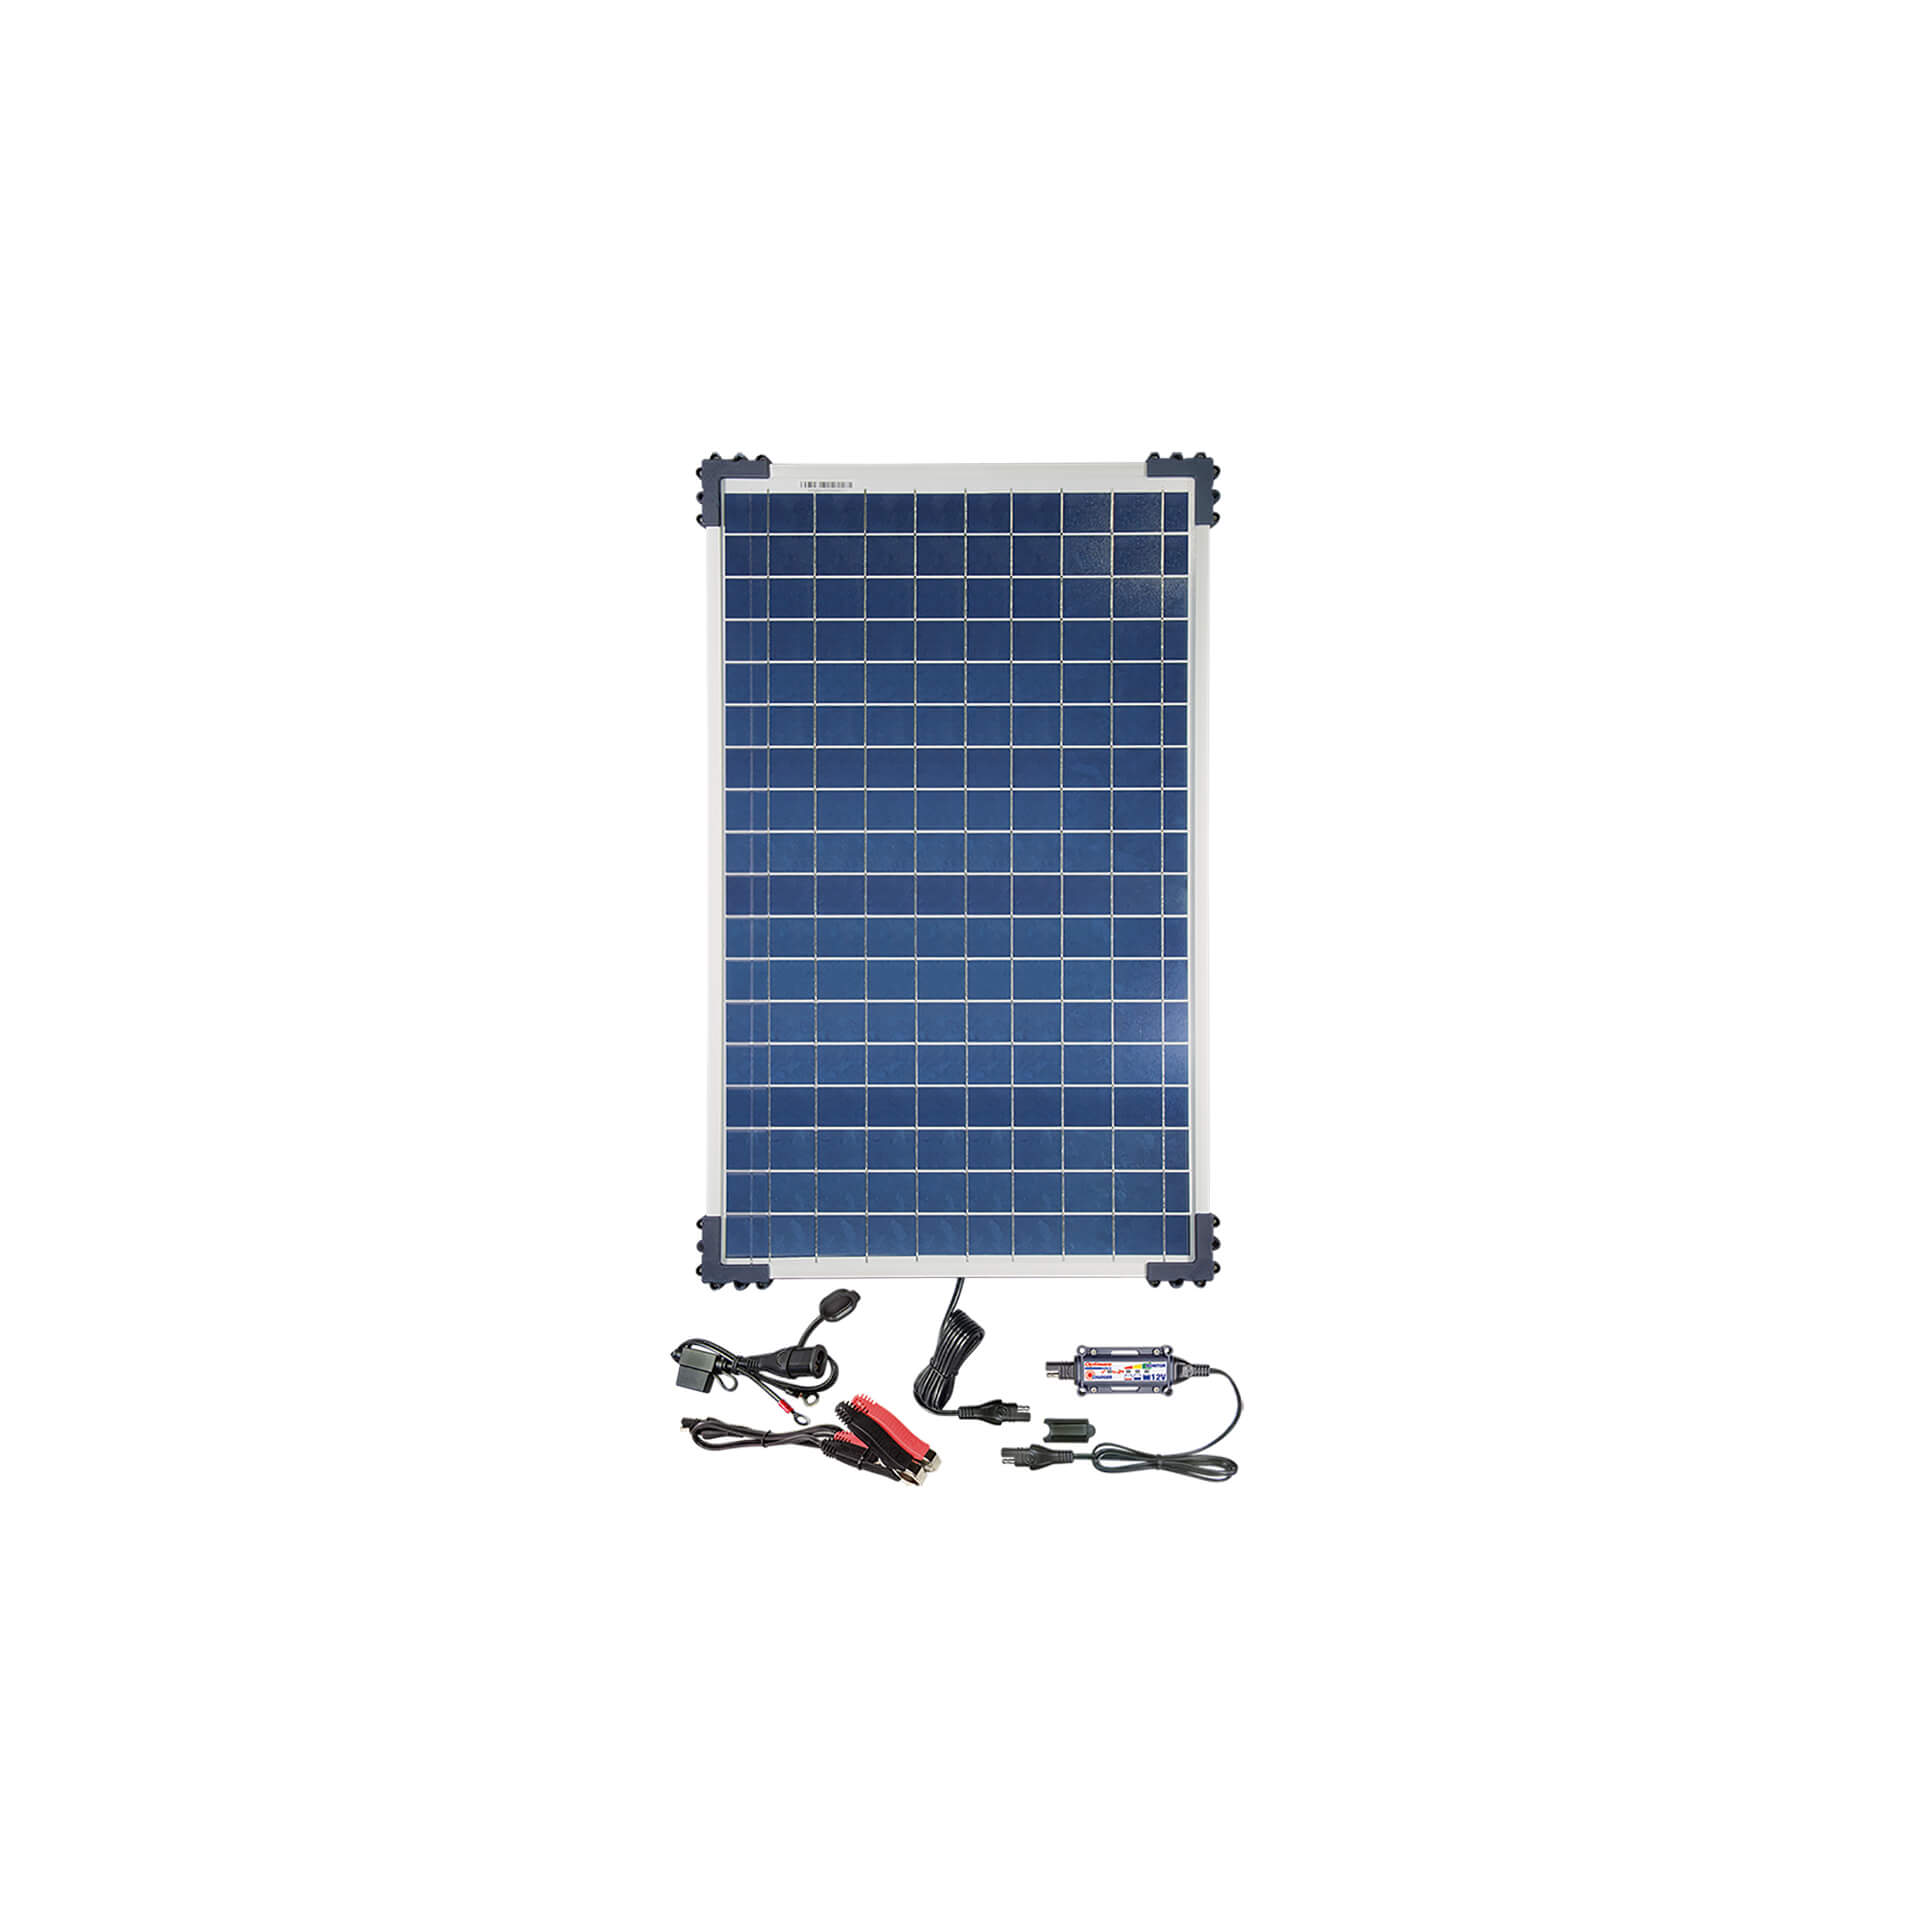 optimate Solar DUO Ladegerät 40 Watt für Blei/GEL/AGM/LFP